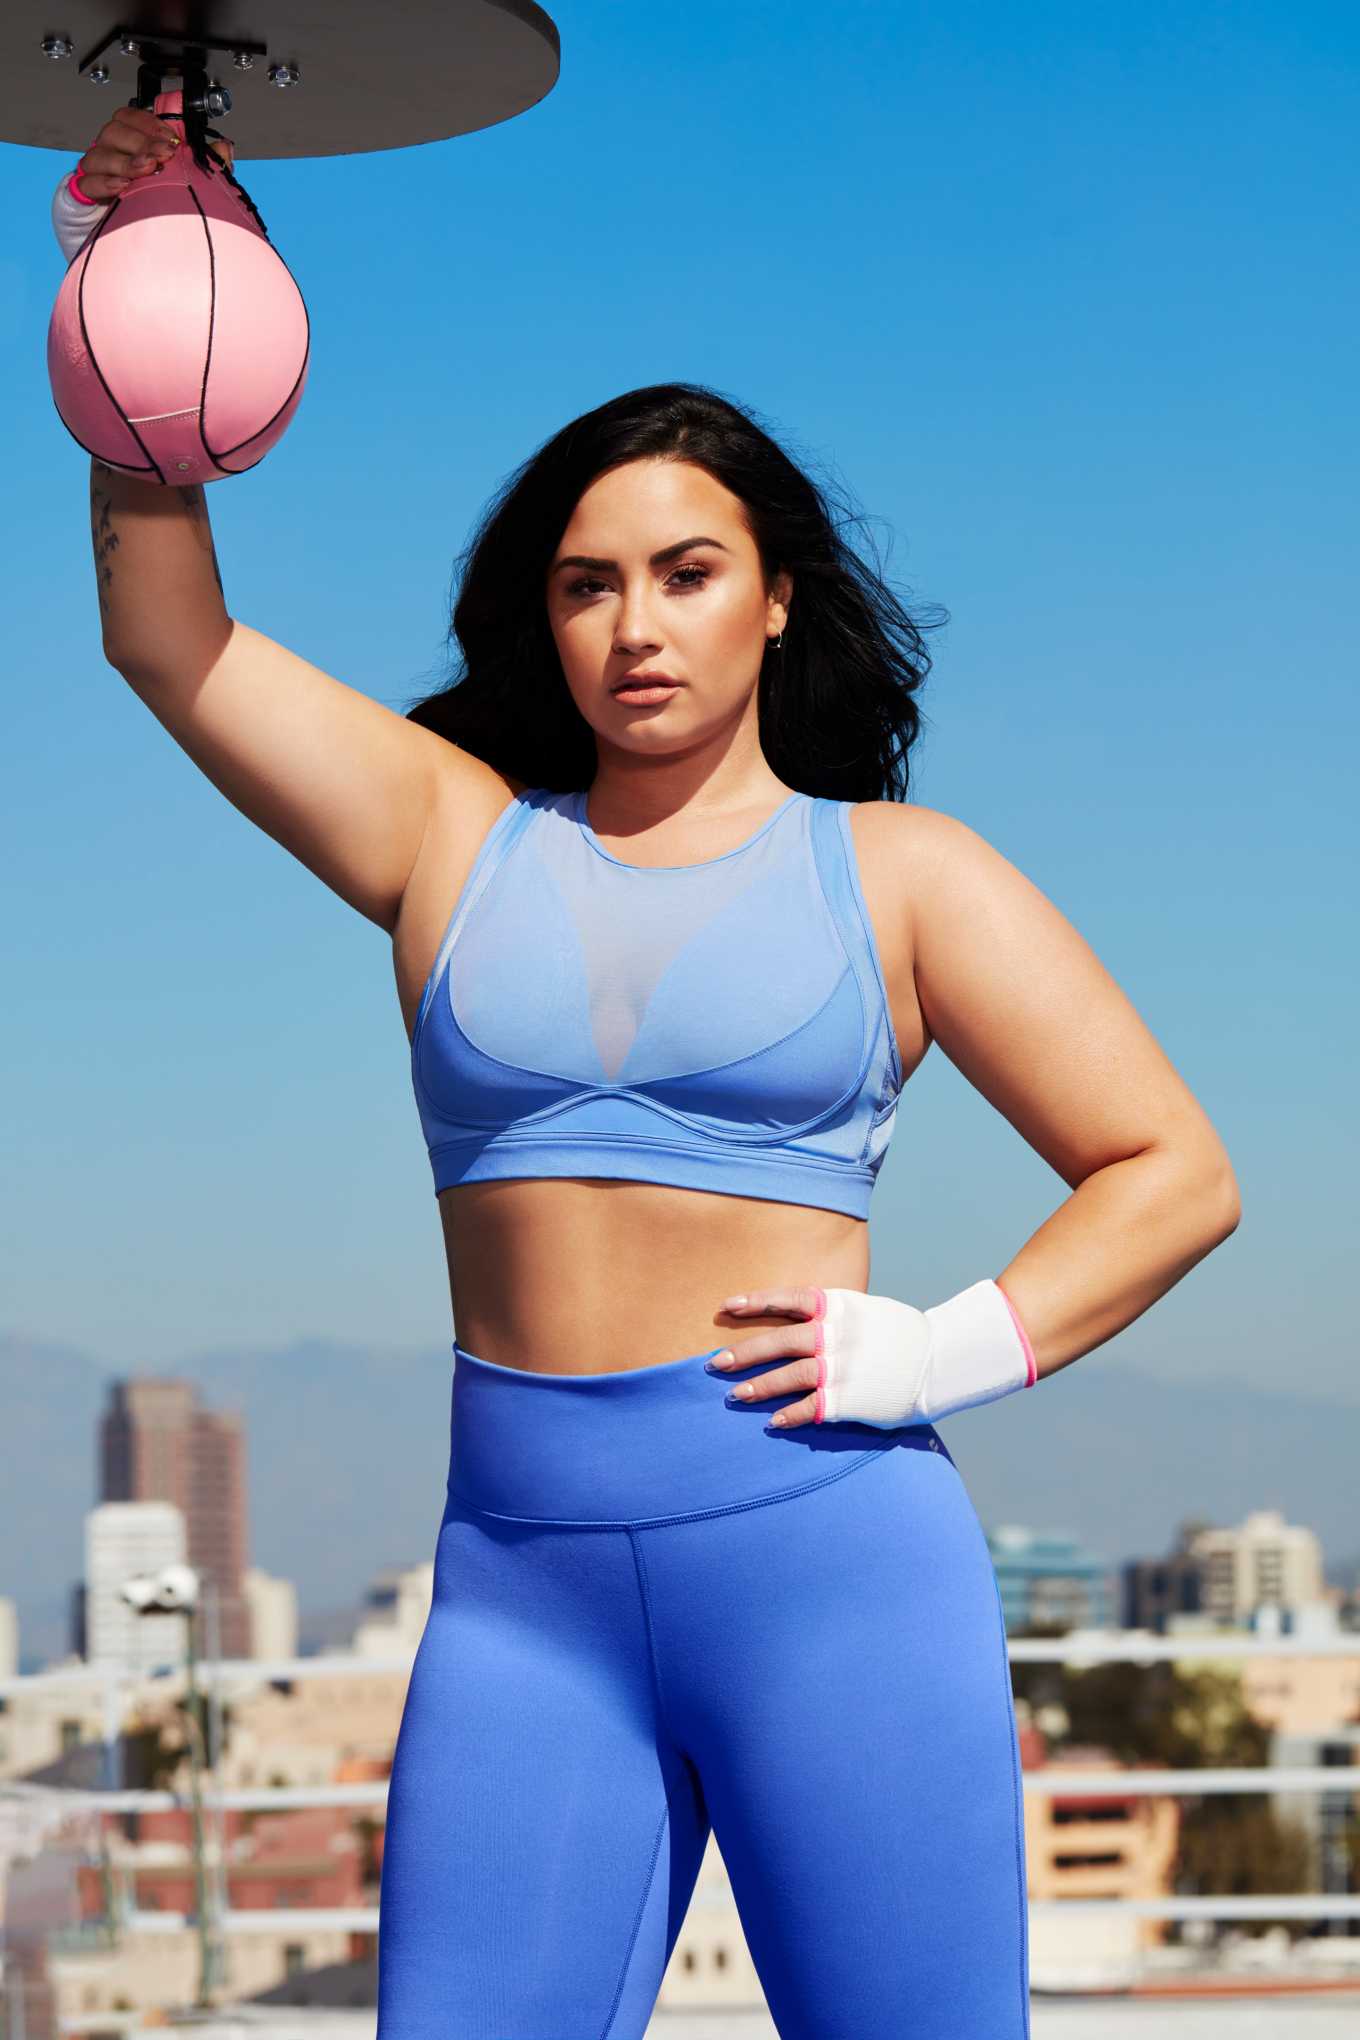 Demi Lovato Fabletics Photoshoot Wallpapers